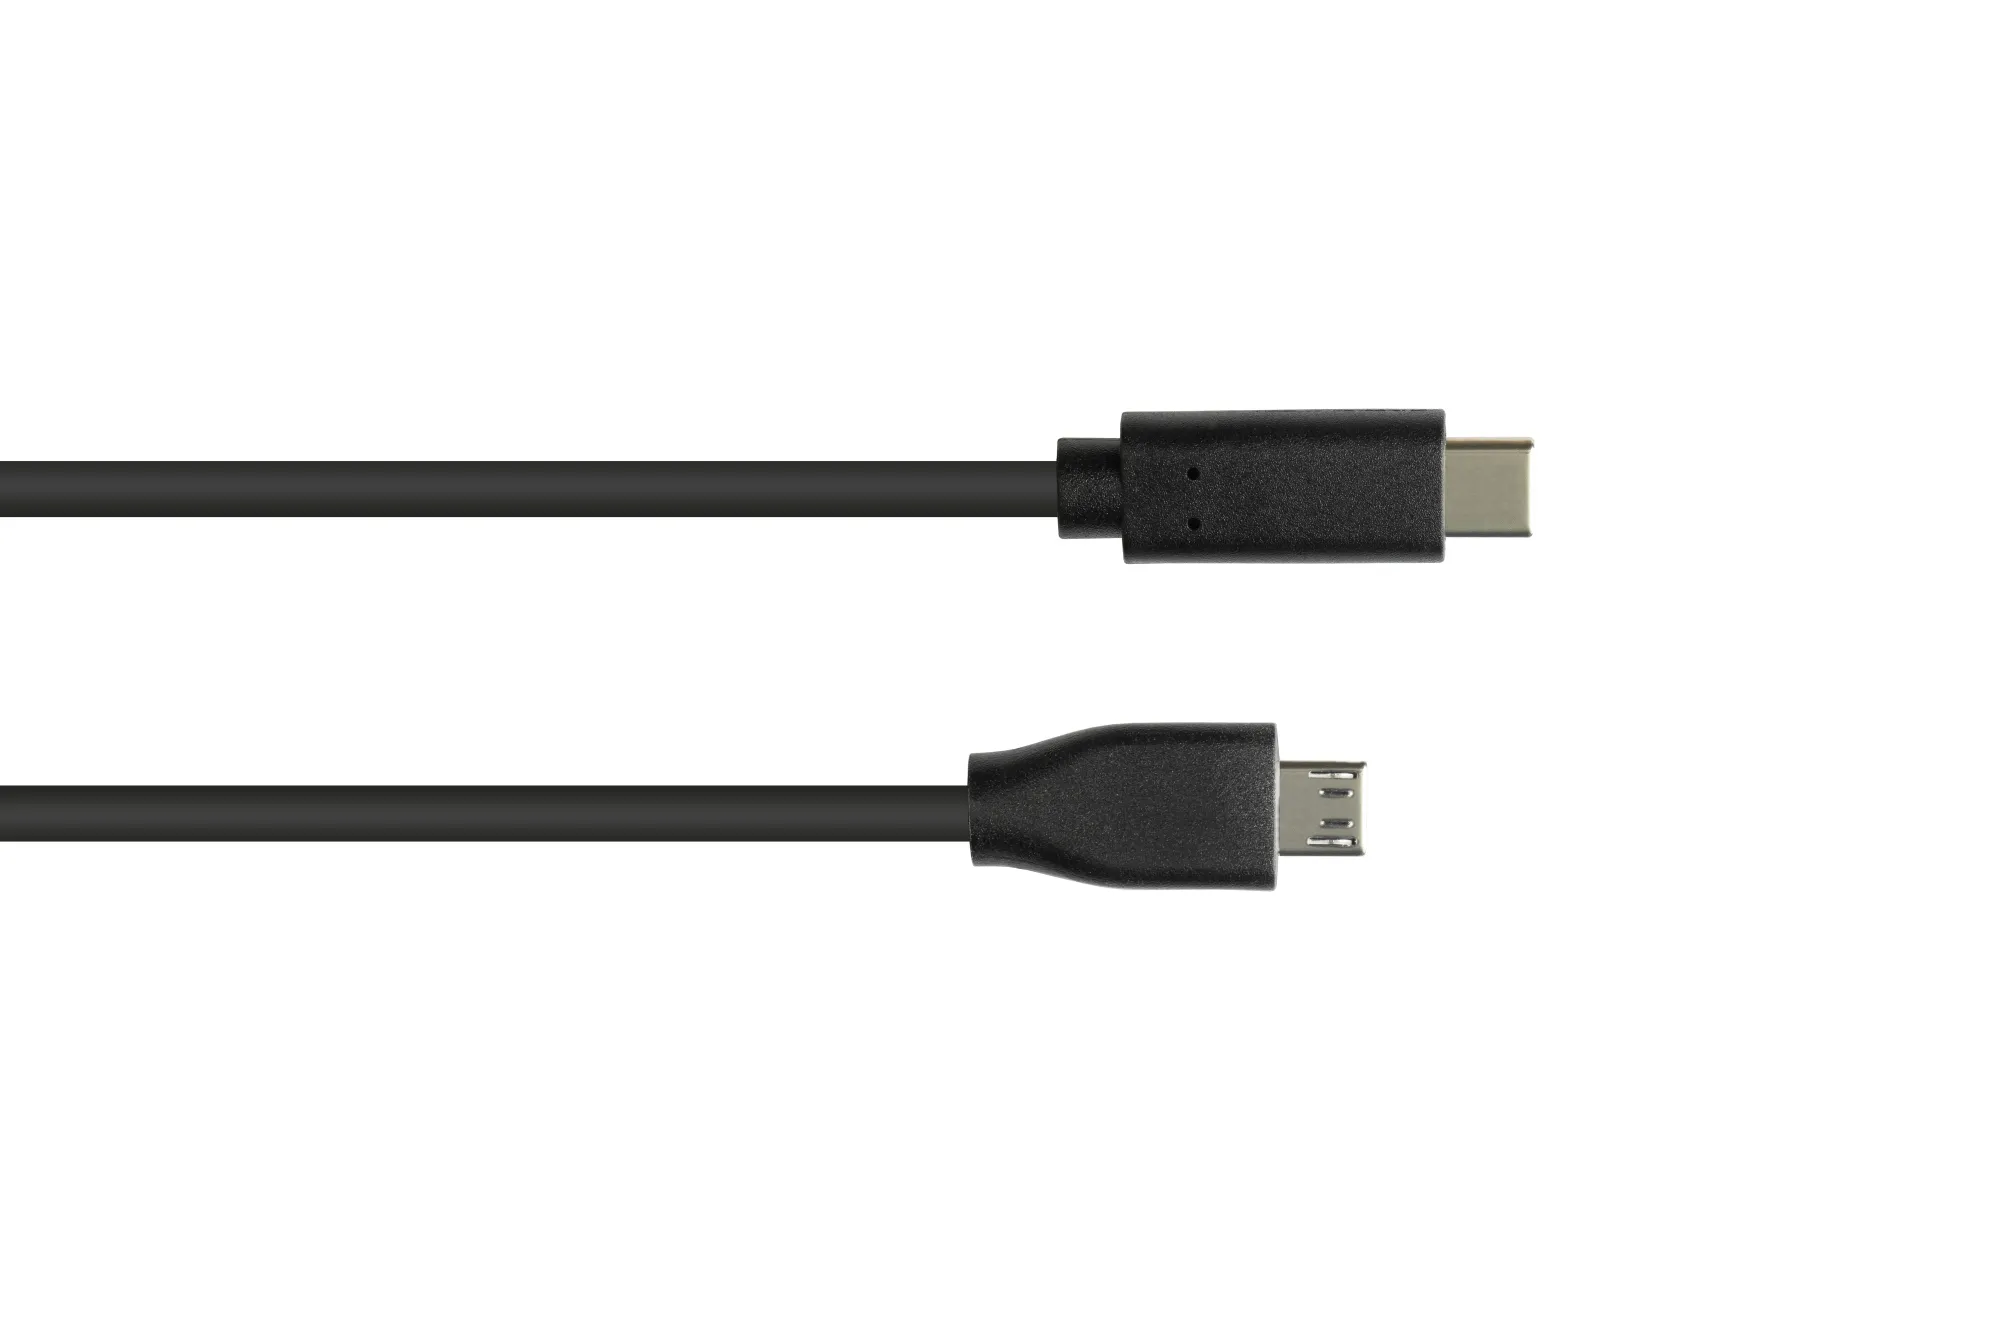 Anschlusskabel USB 2.0, USB 2.0 Micro B Stecker an USB-C™ Stecker , CU, schwarz, 2m, Good Connection